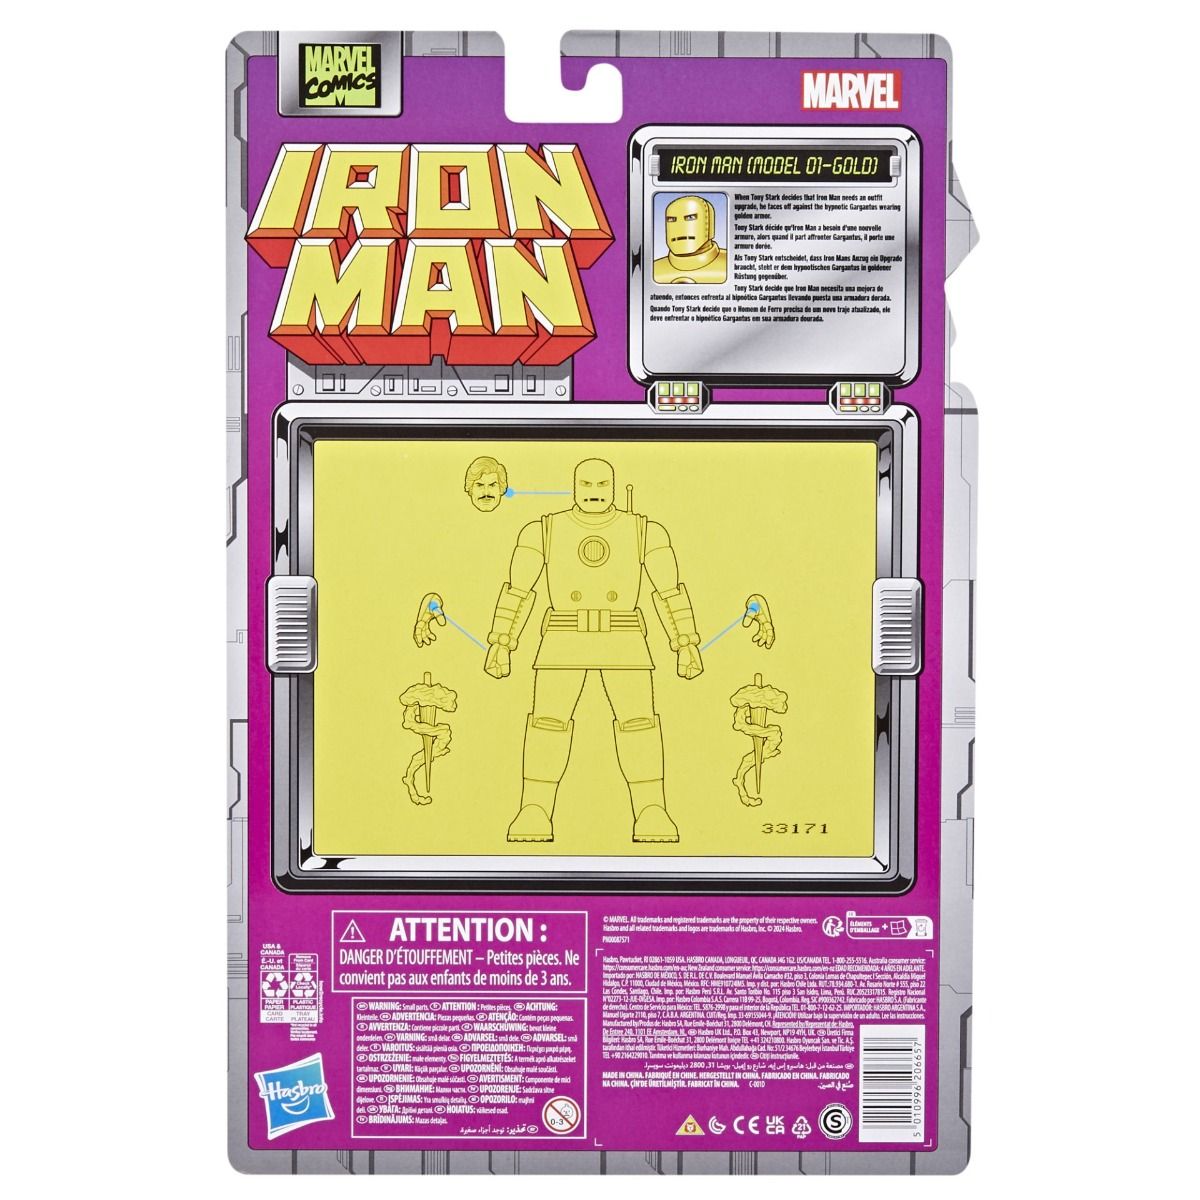 Marvel Legends Iron Man Comics Iron Man(Model 01-Gold) 6-Inch Action Figure画像